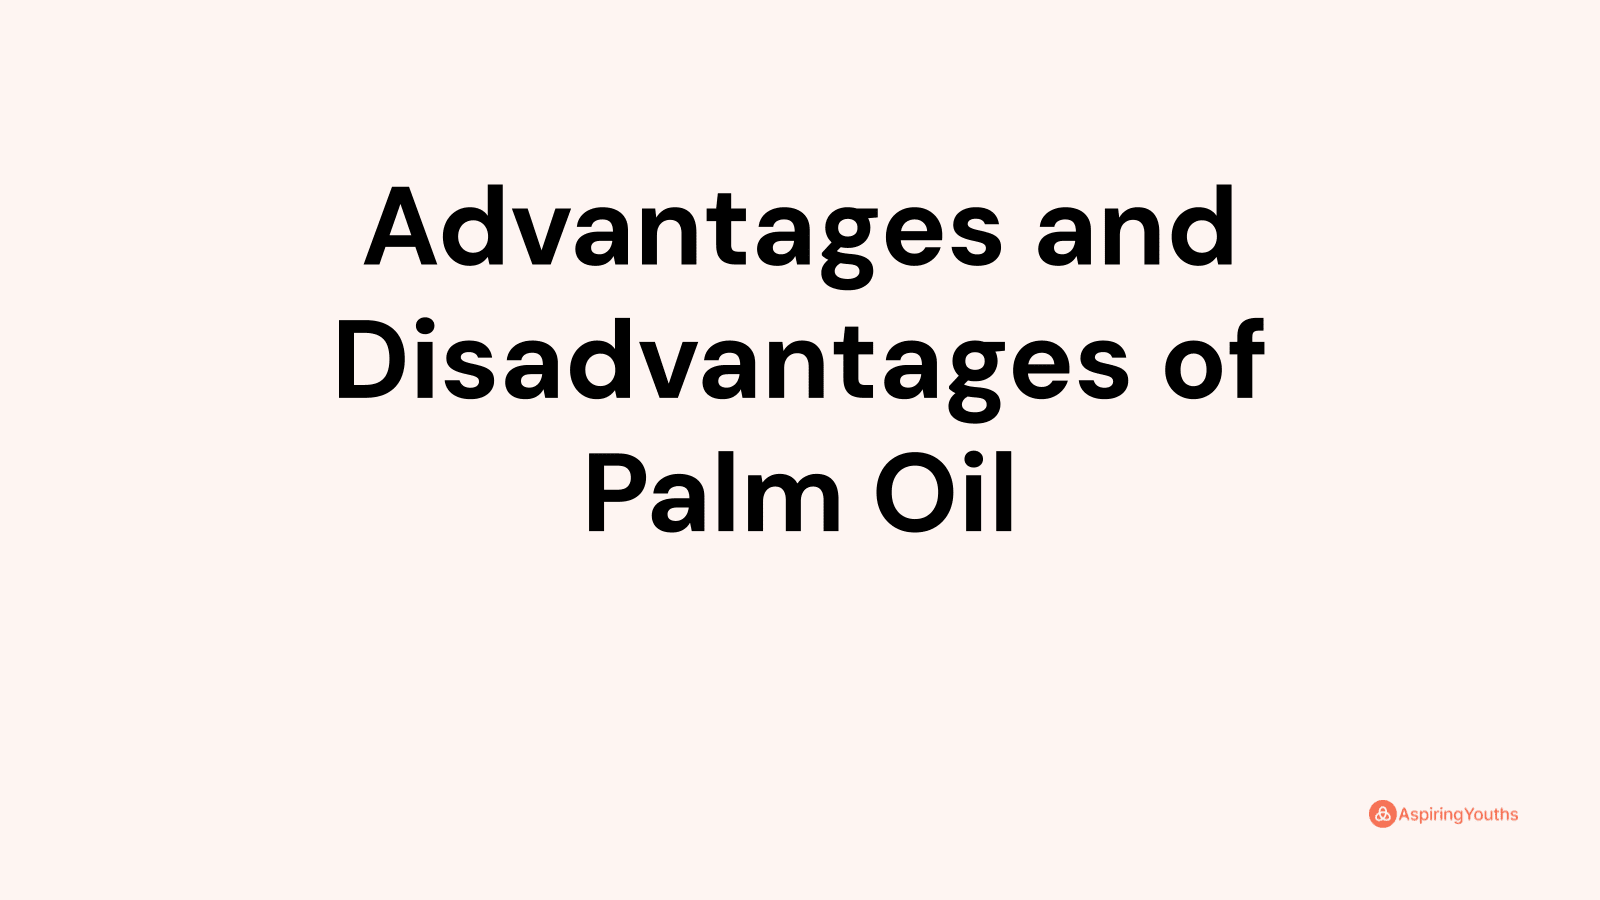 Advantages and disadvantages of Palm Oil